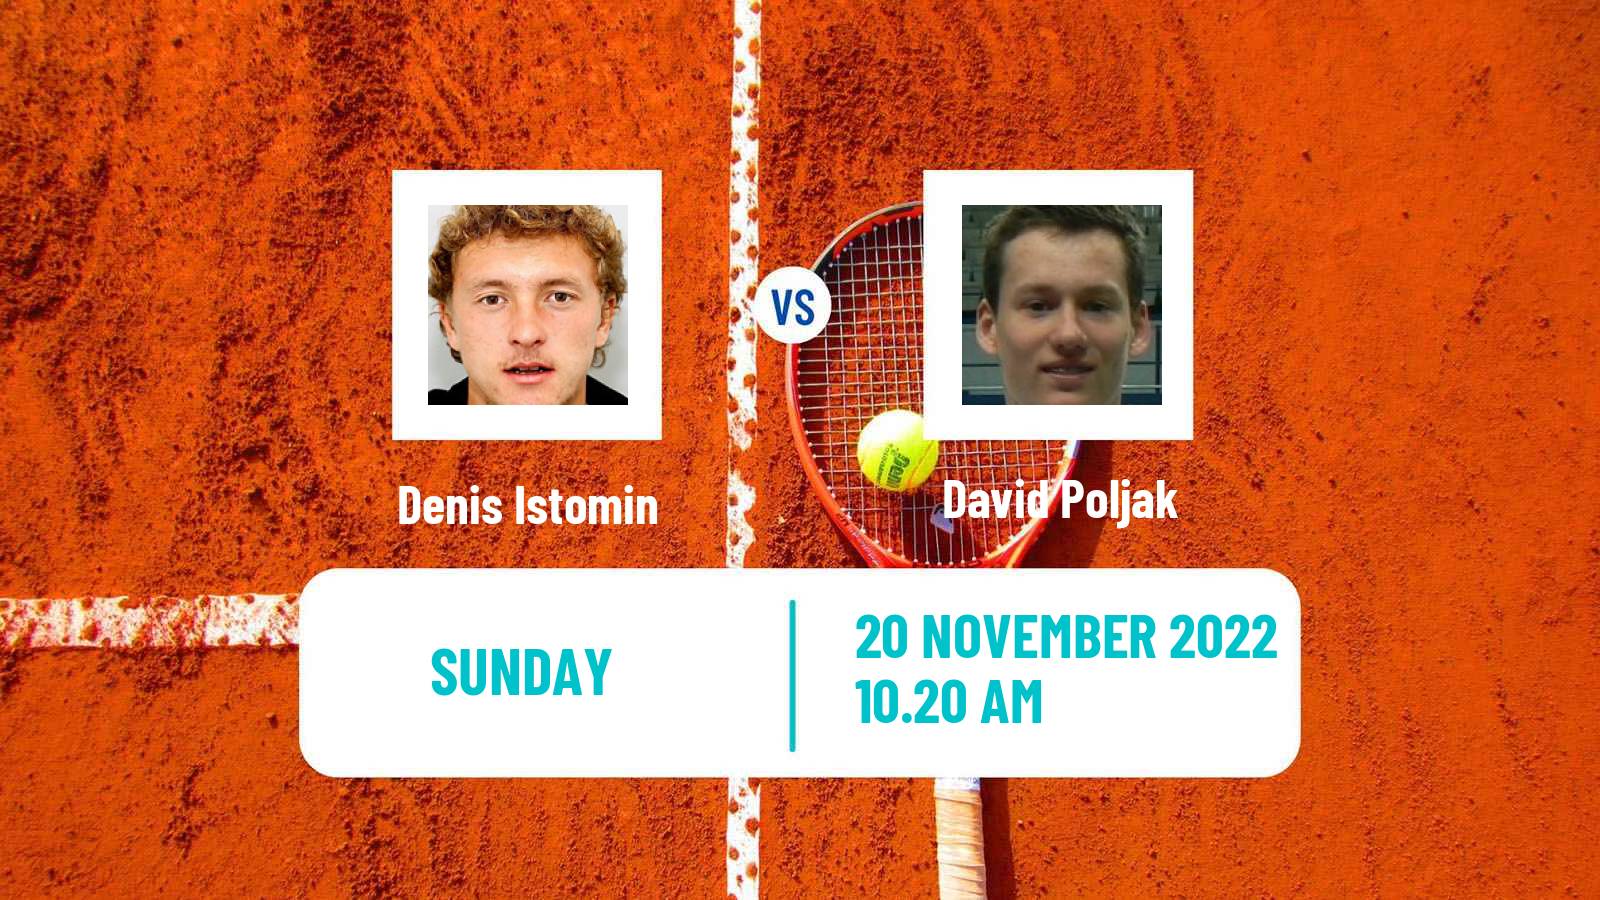 Tennis ATP Challenger Denis Istomin - David Poljak